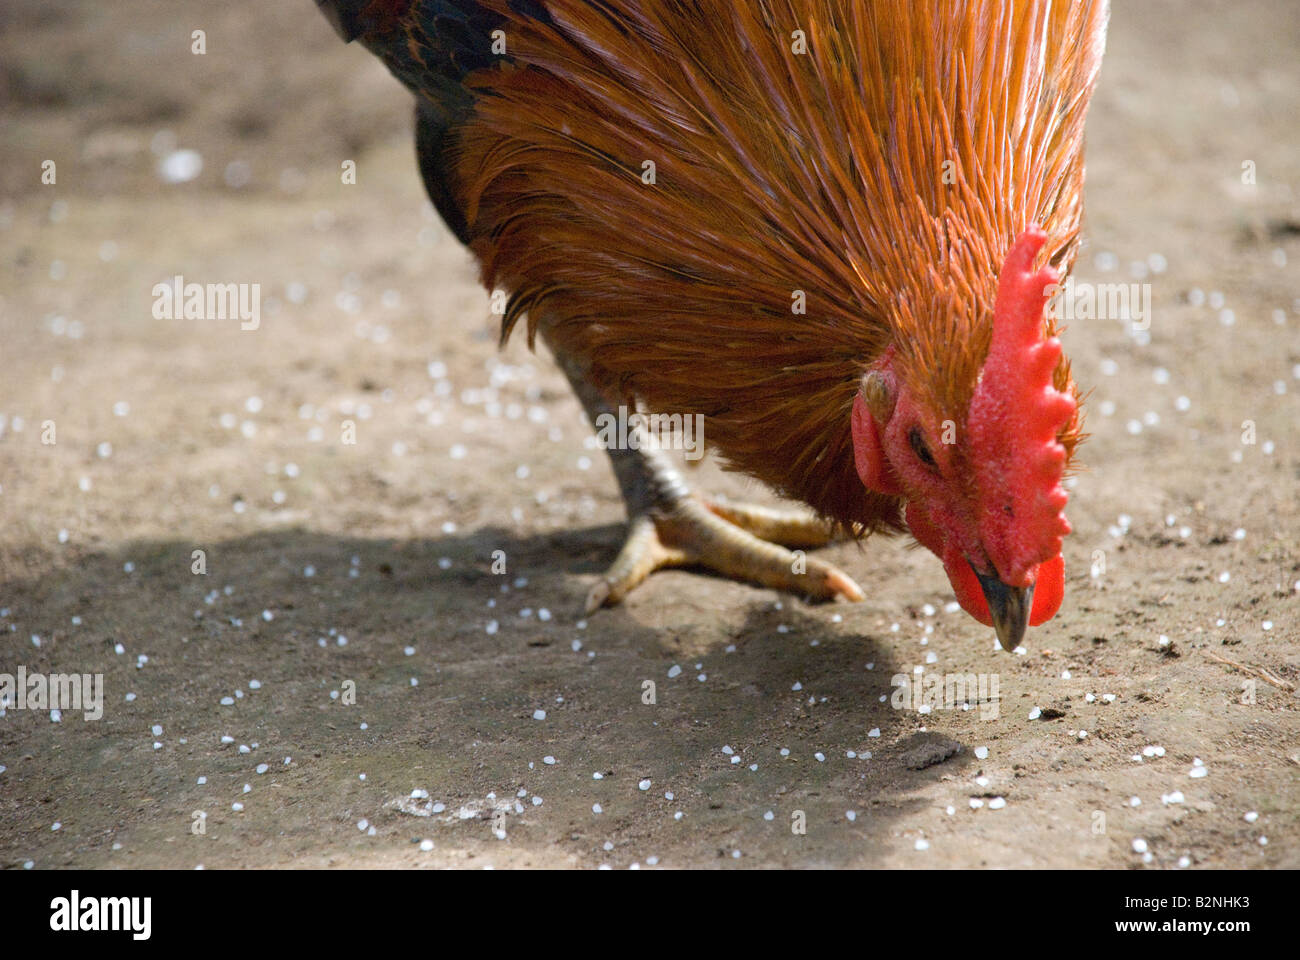 Ubud bali indonesia comer pollo de granja gallo picotear semillas ojo pico pluma roja garra comer aves talon Foto de stock